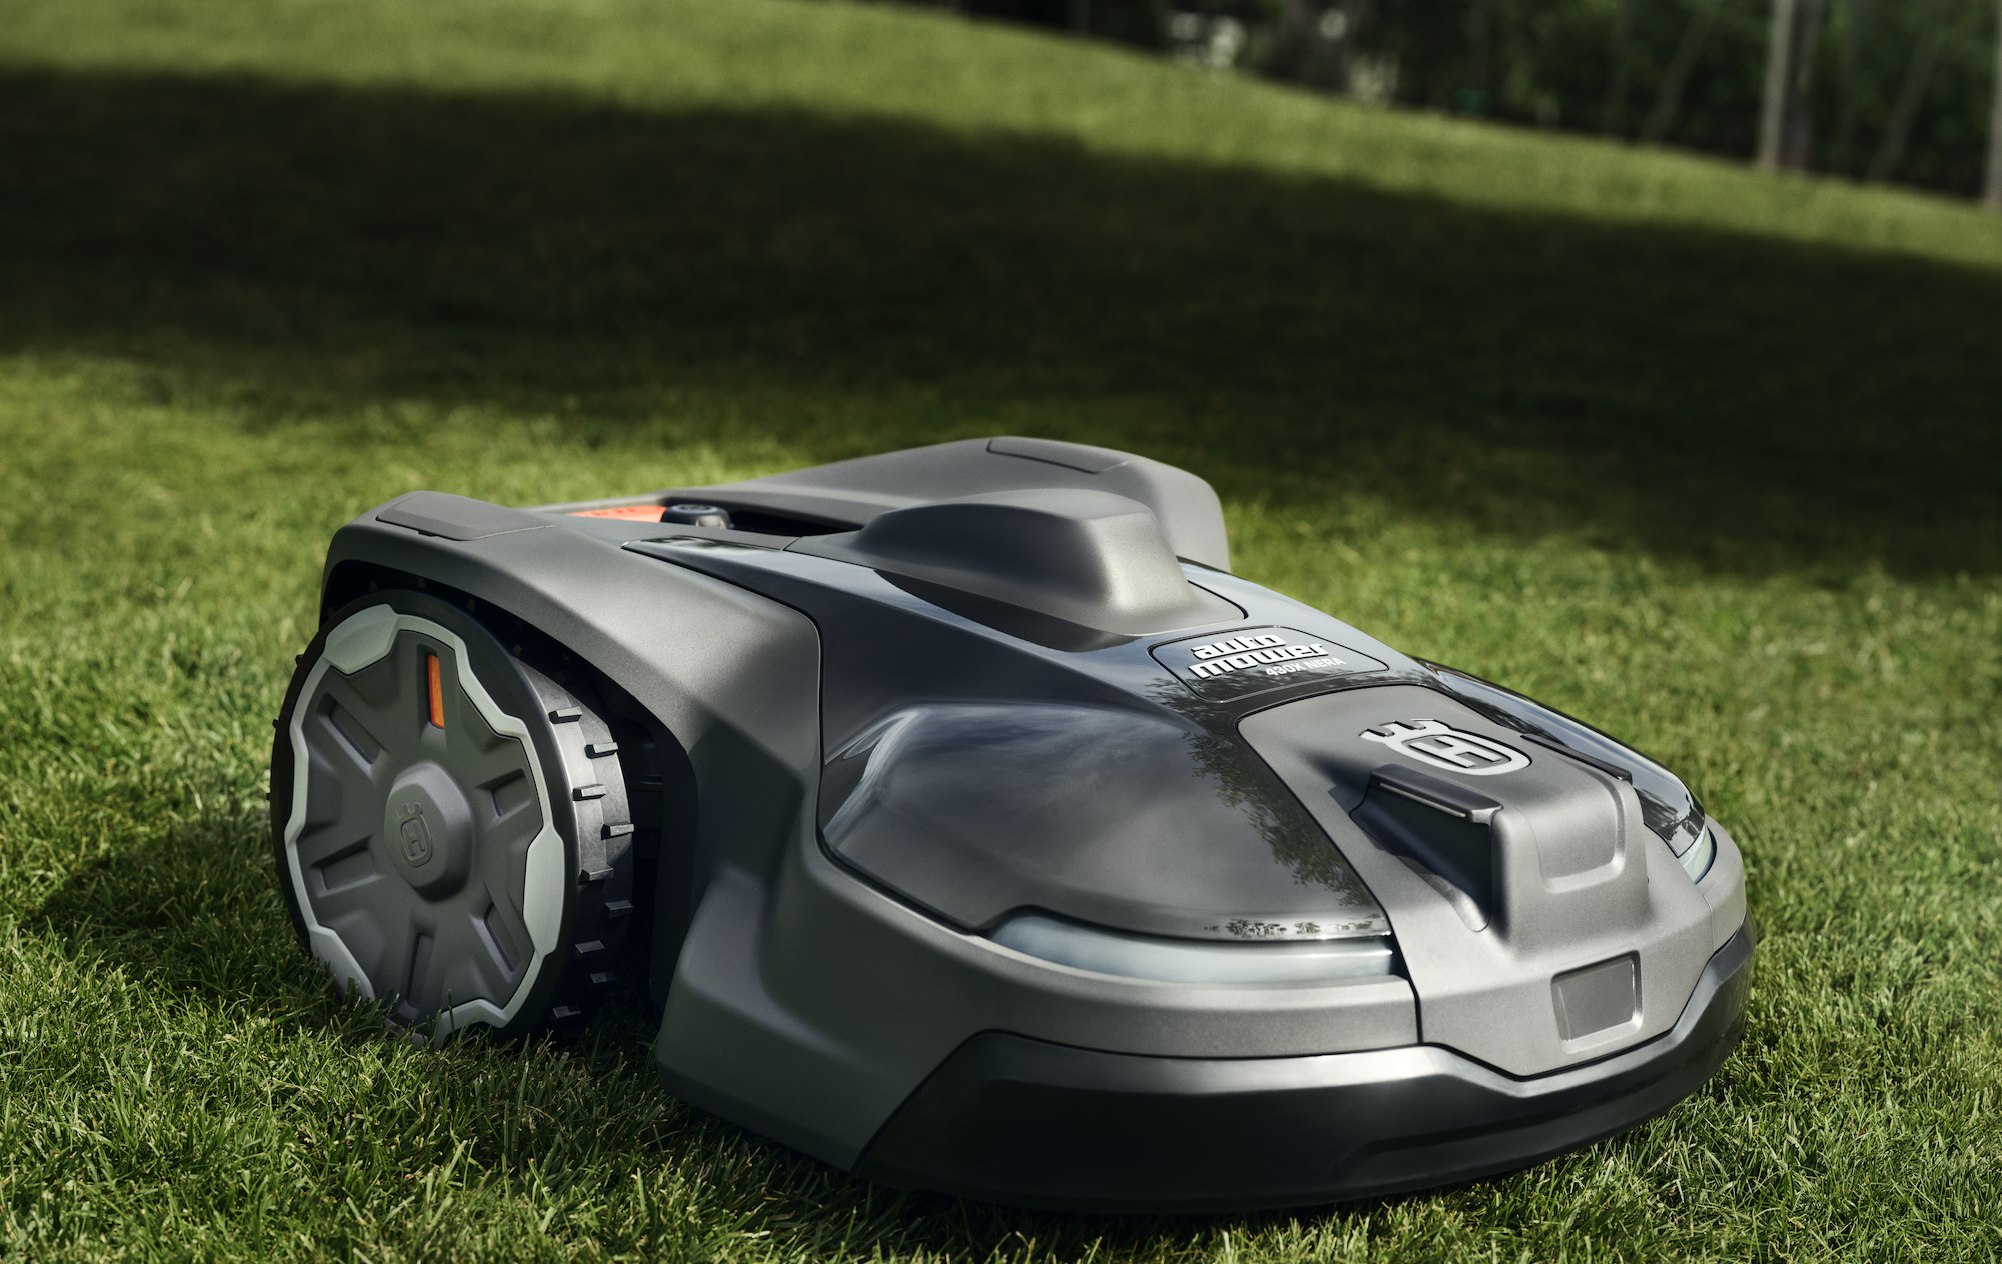 Automower® NERA revolutionises lawn care